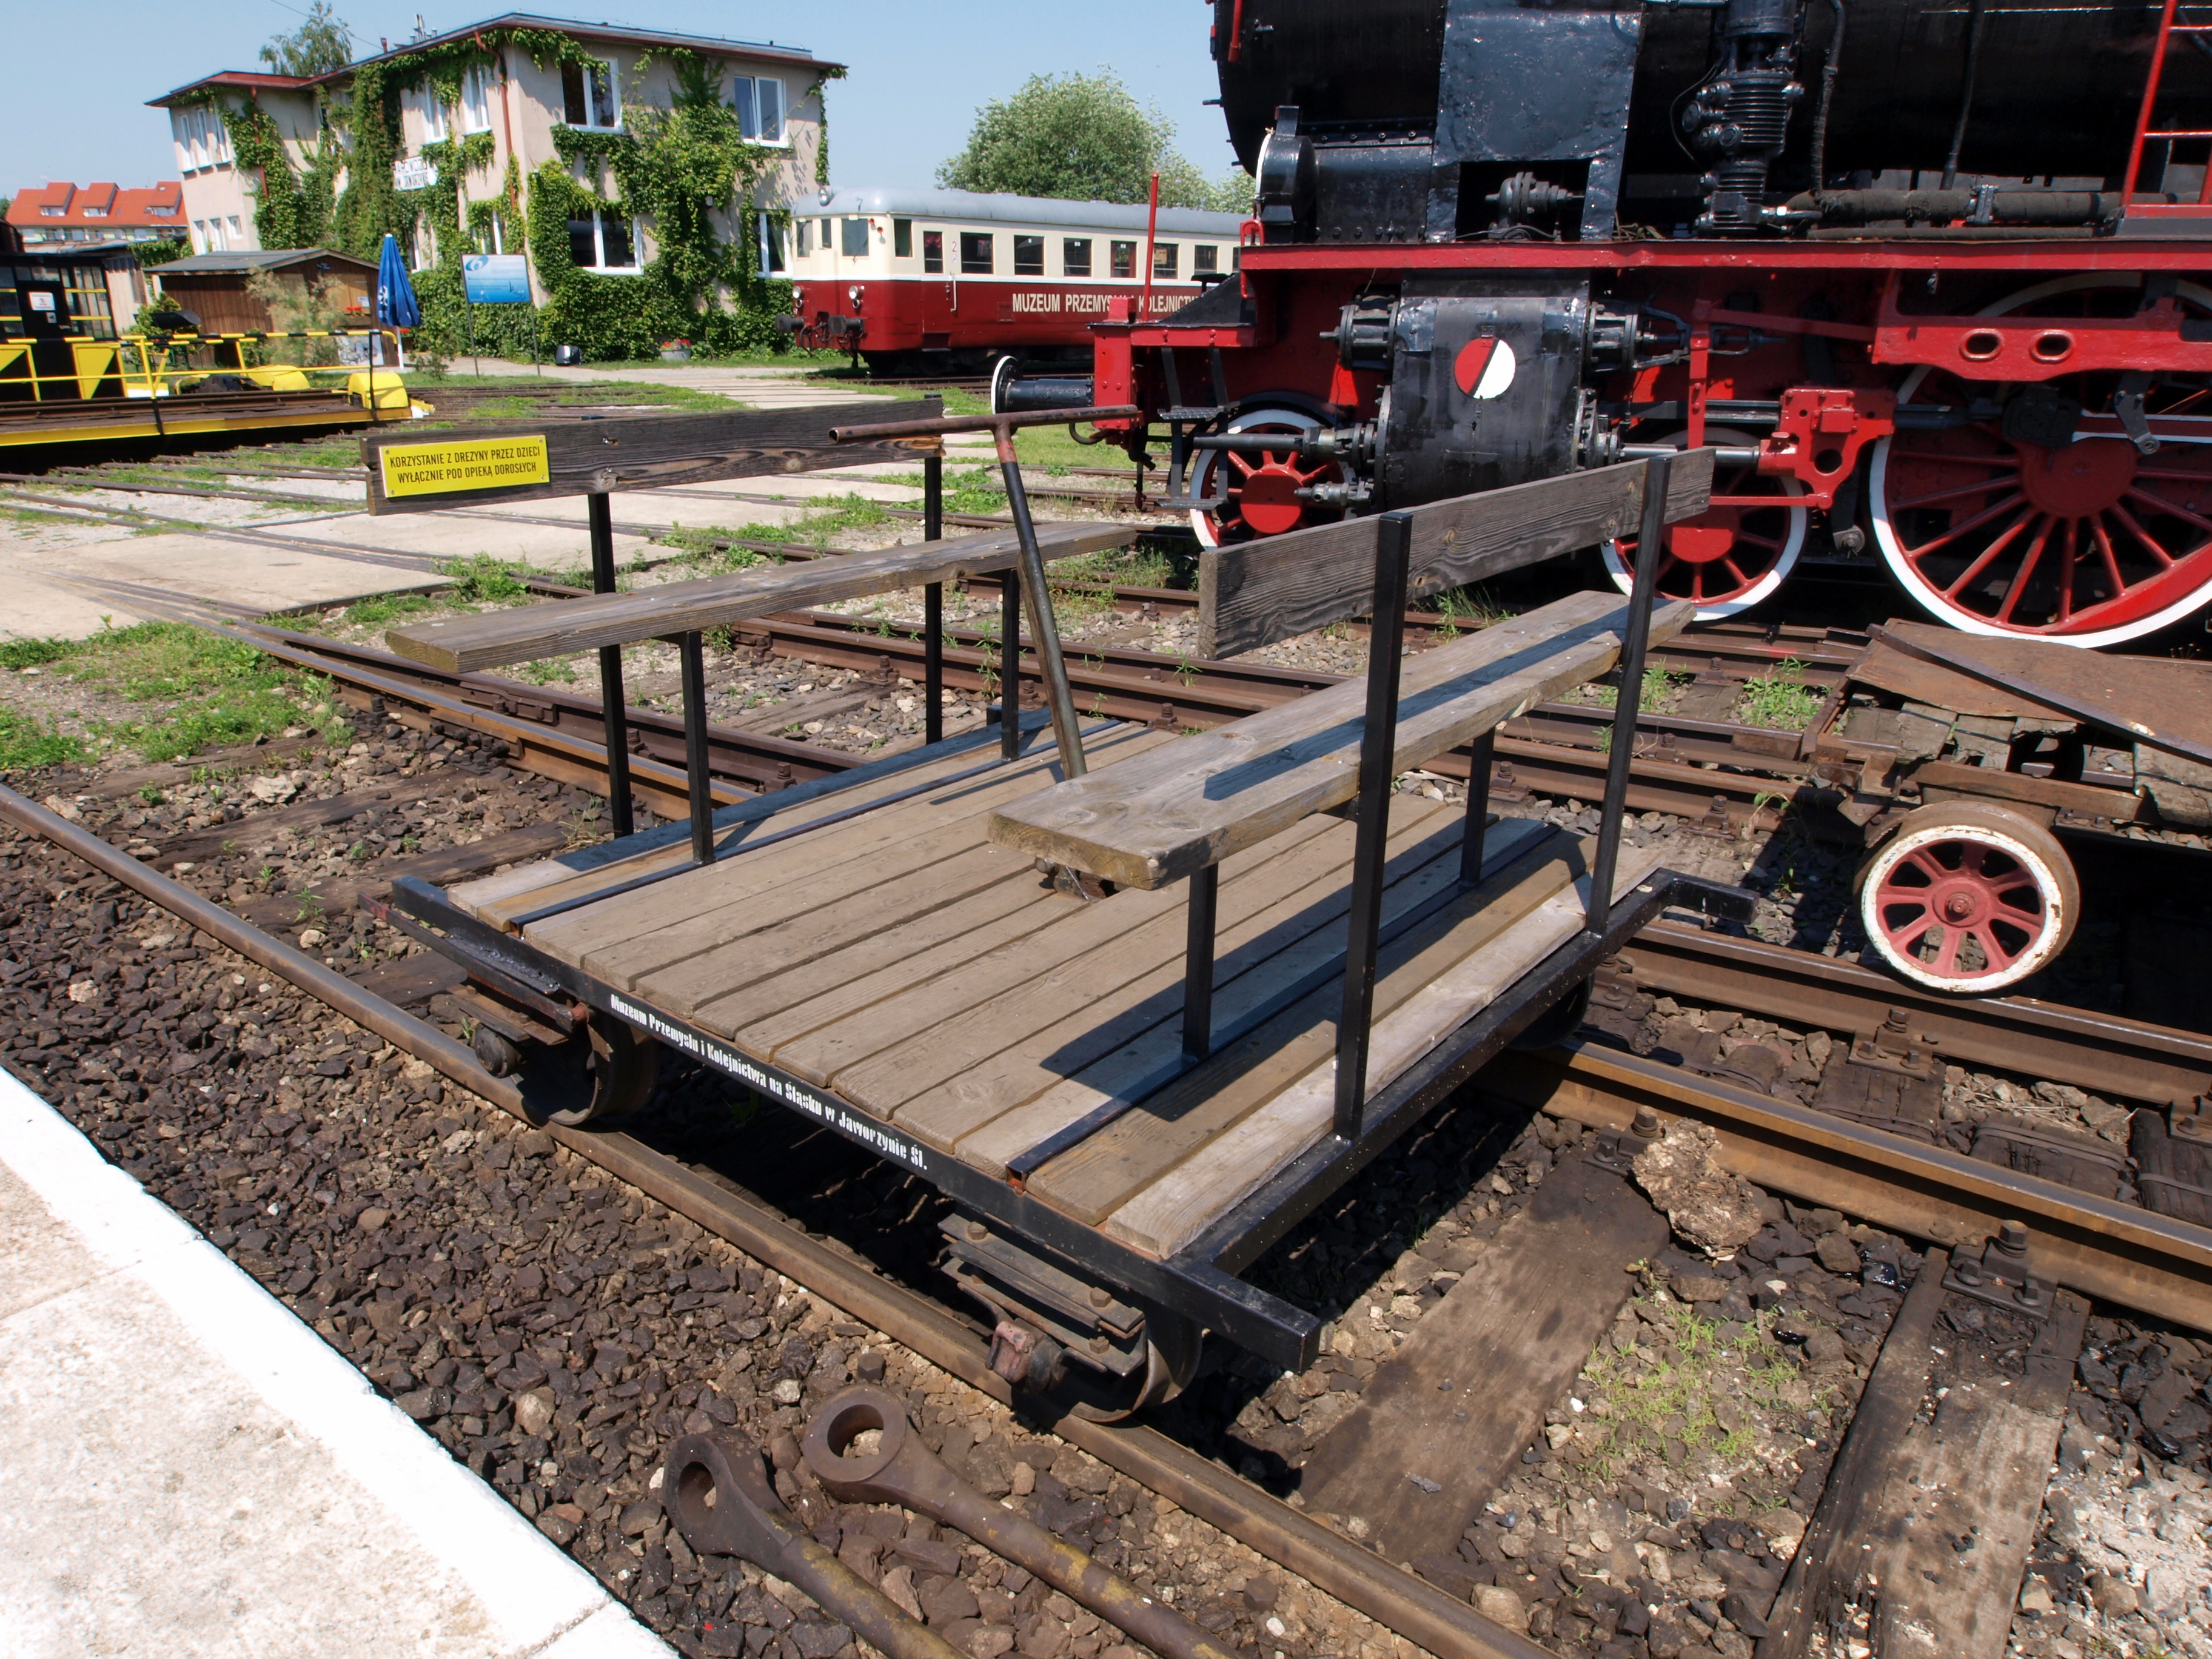 File:Old railway service vehicle.JPG - Wikimedia Commons